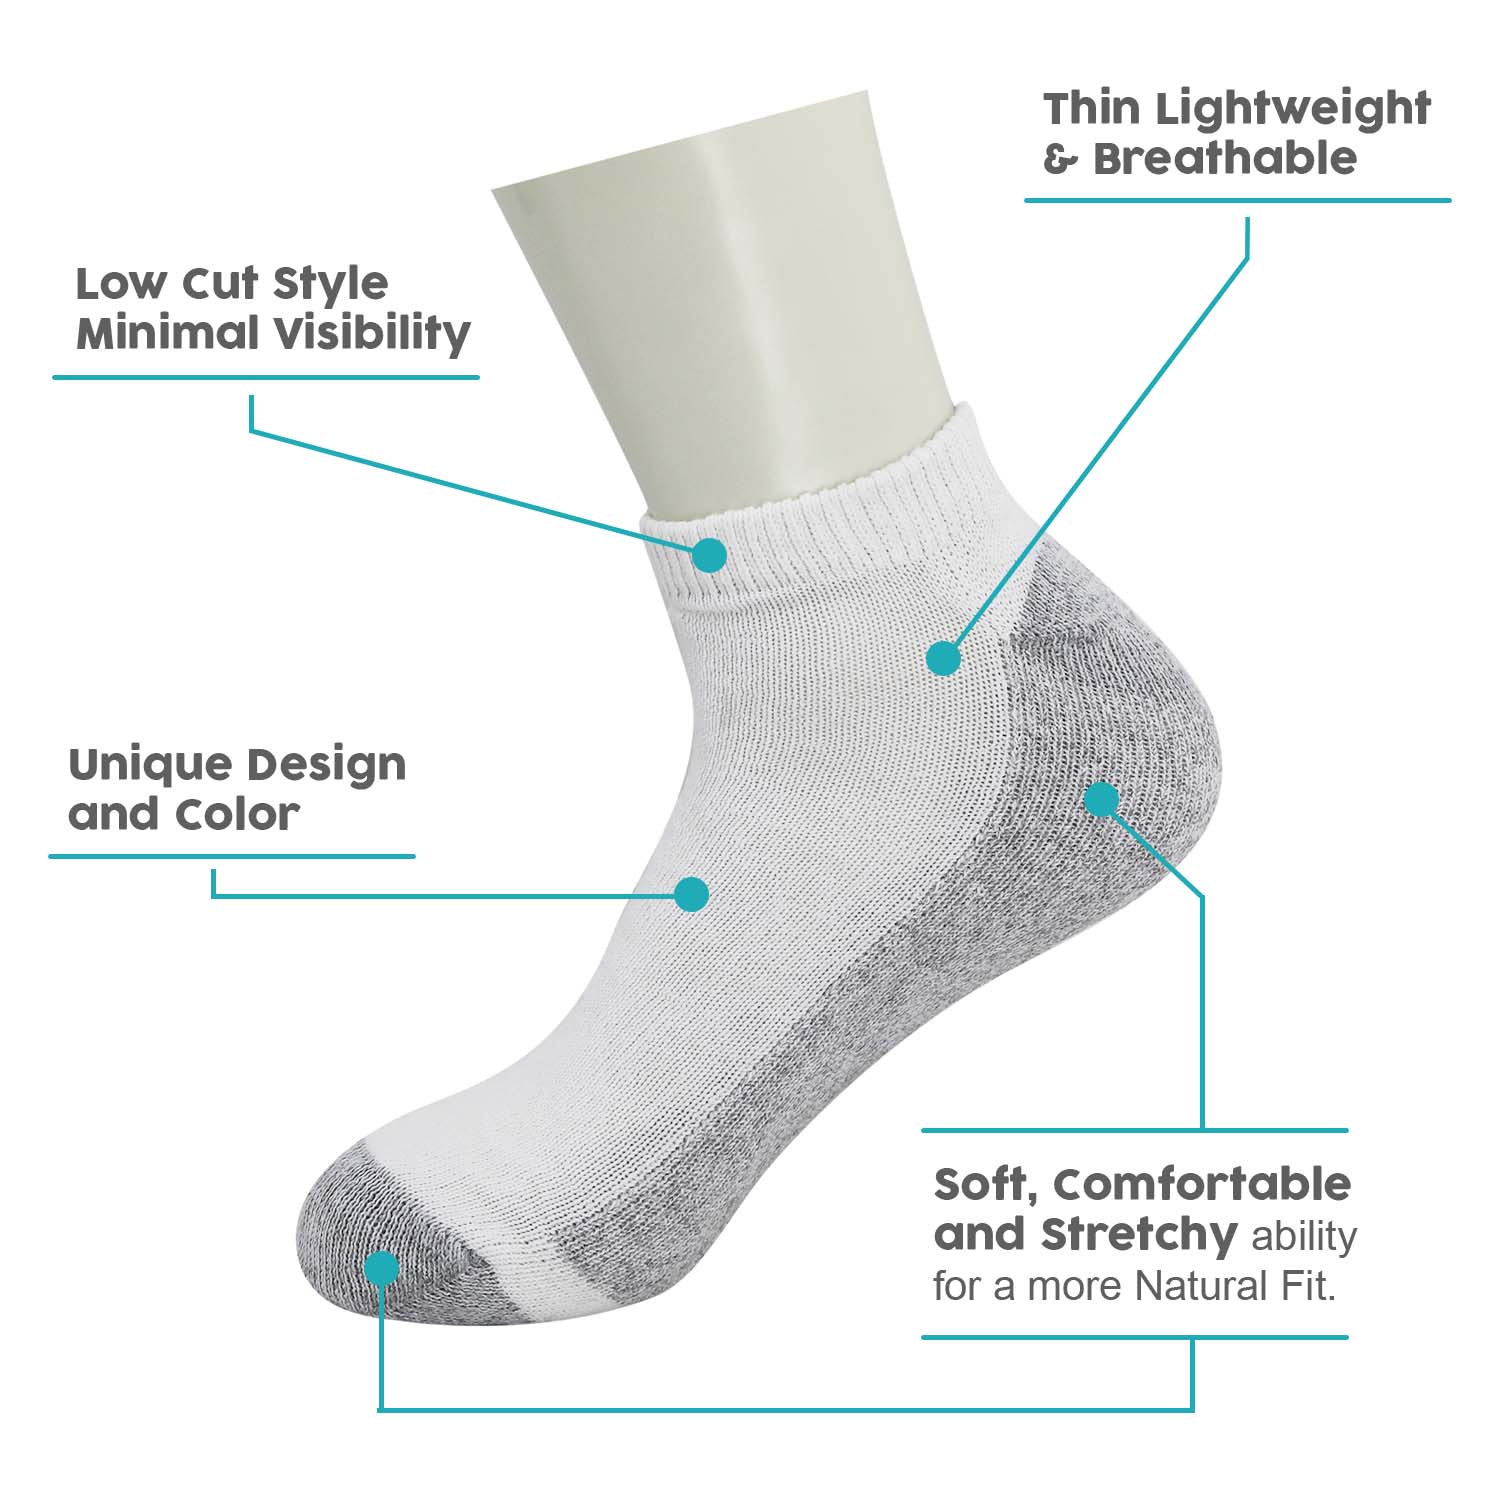 Men's Ankle Wholesale Socks, Size 10-13 in White - Bulk Case Of 96 Pairs